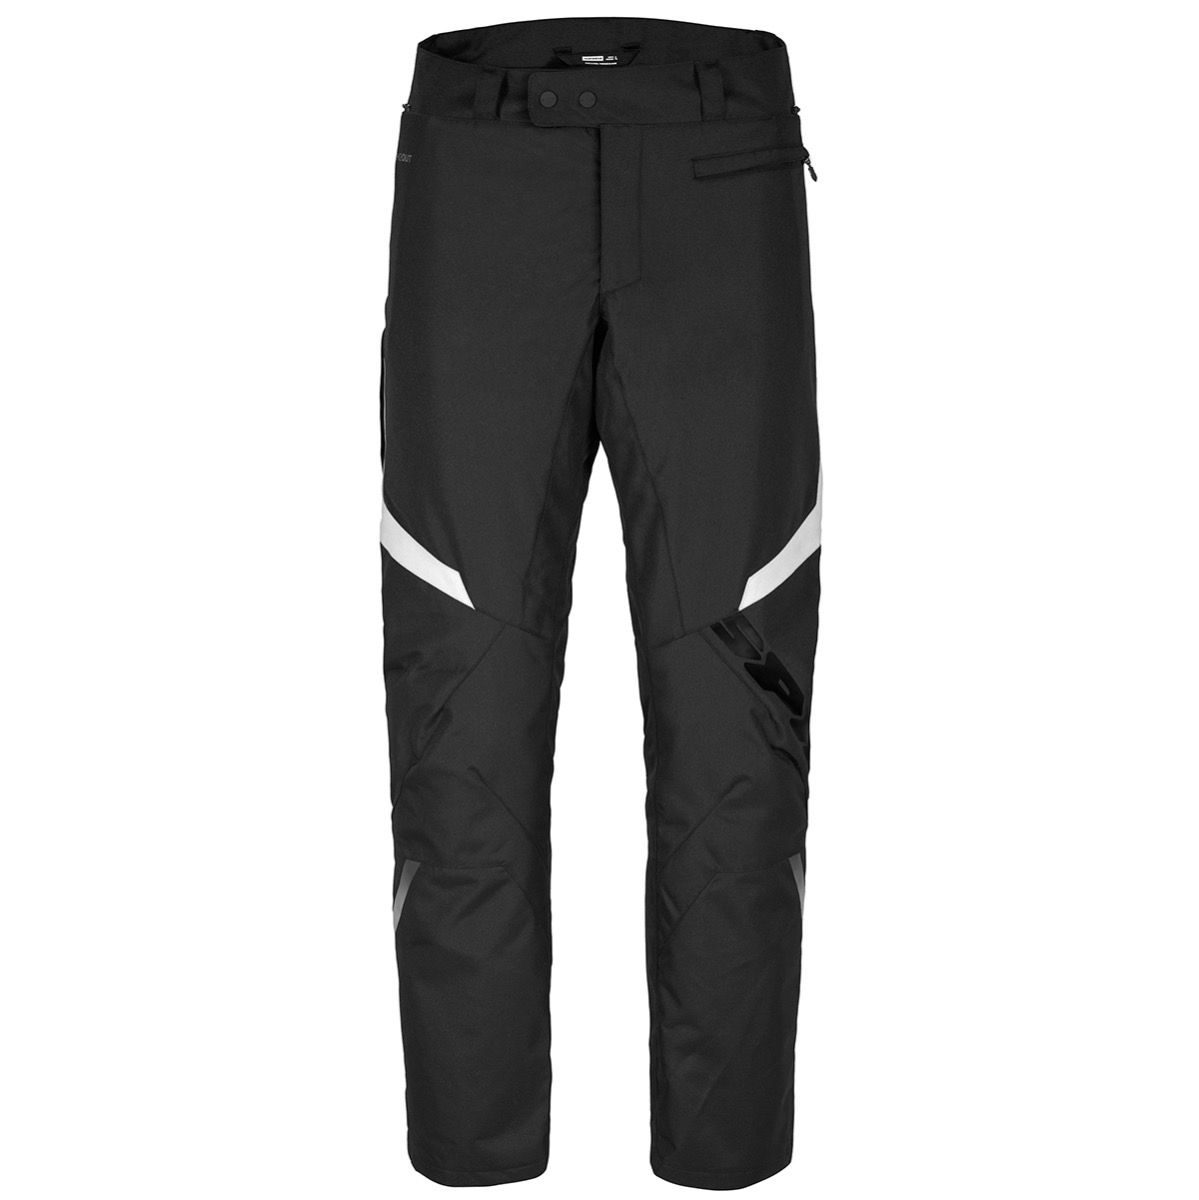 Image of Spidi Sportmaster Pants Black White Size 3XL ID 8030161478167